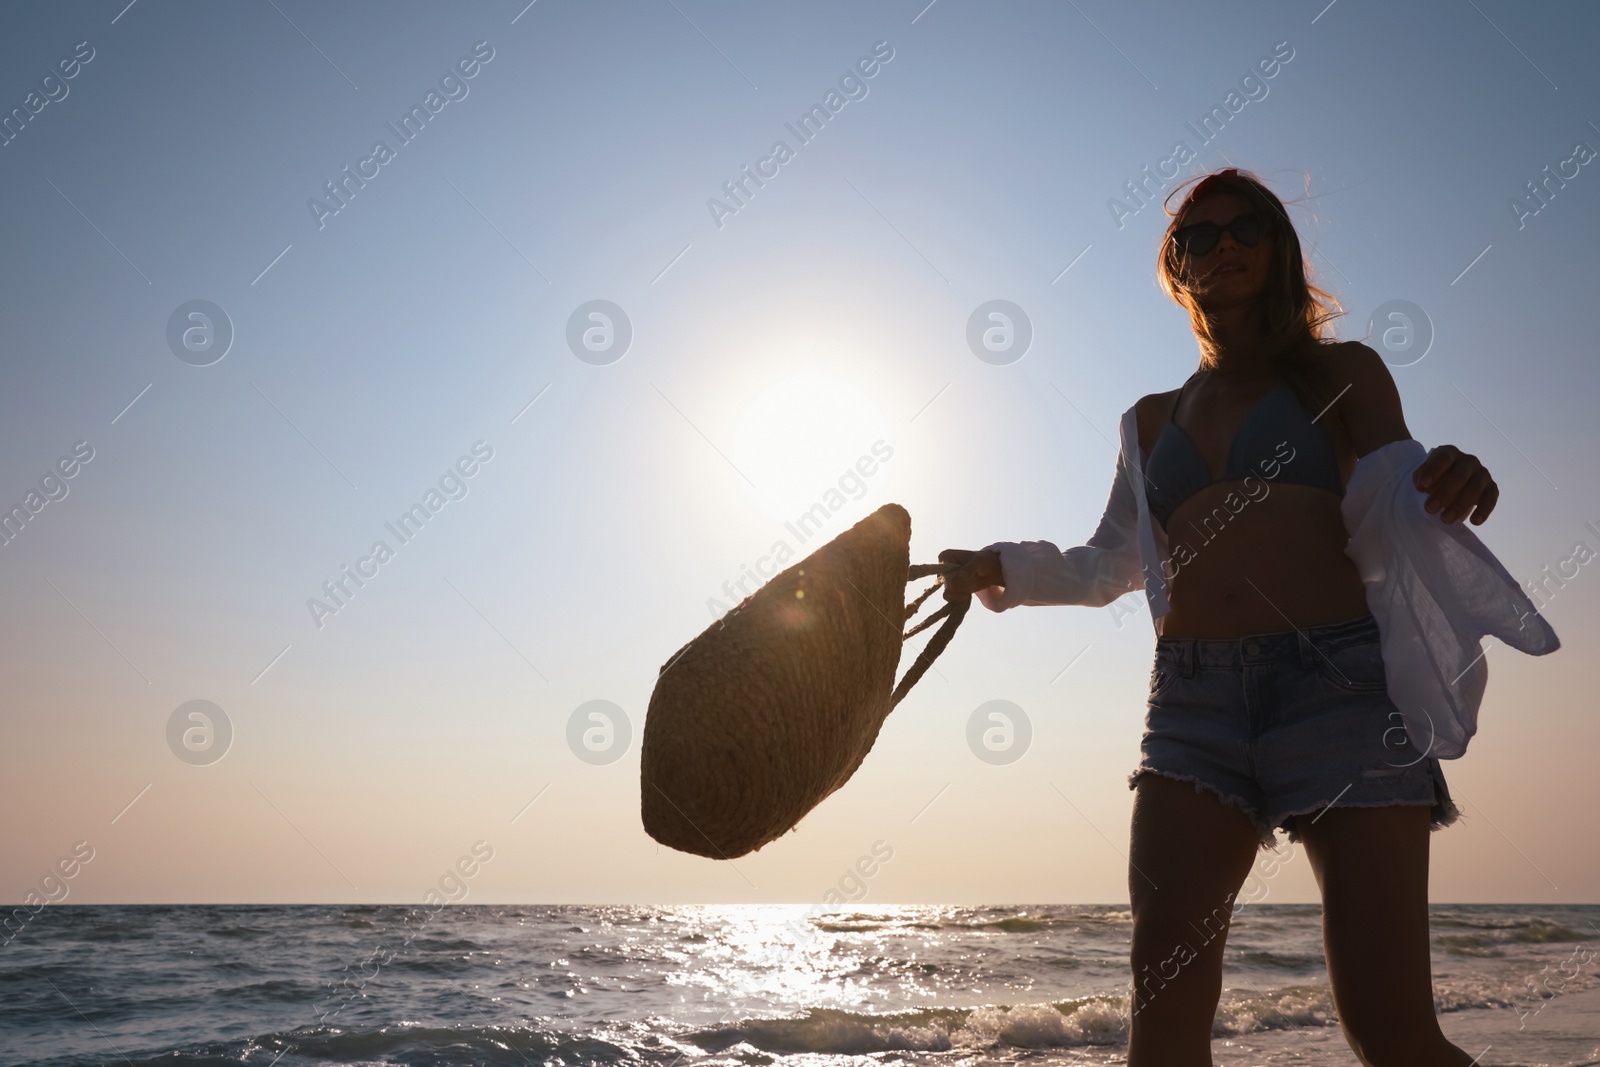 Photo of Woman with beach bag walking on sunlit seashore